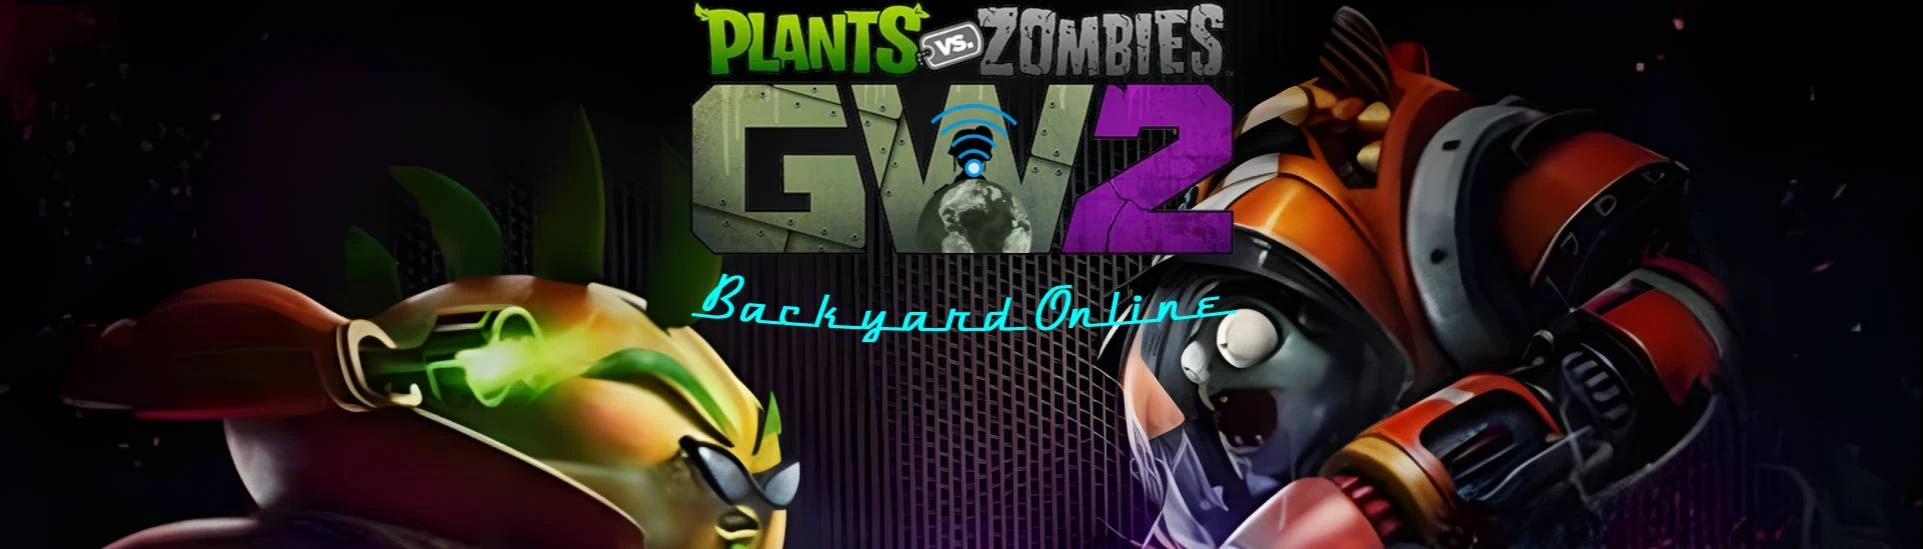 Plants vs. Zombies: Garden Warfare 2 - Gameplay Part 1 - Backyard